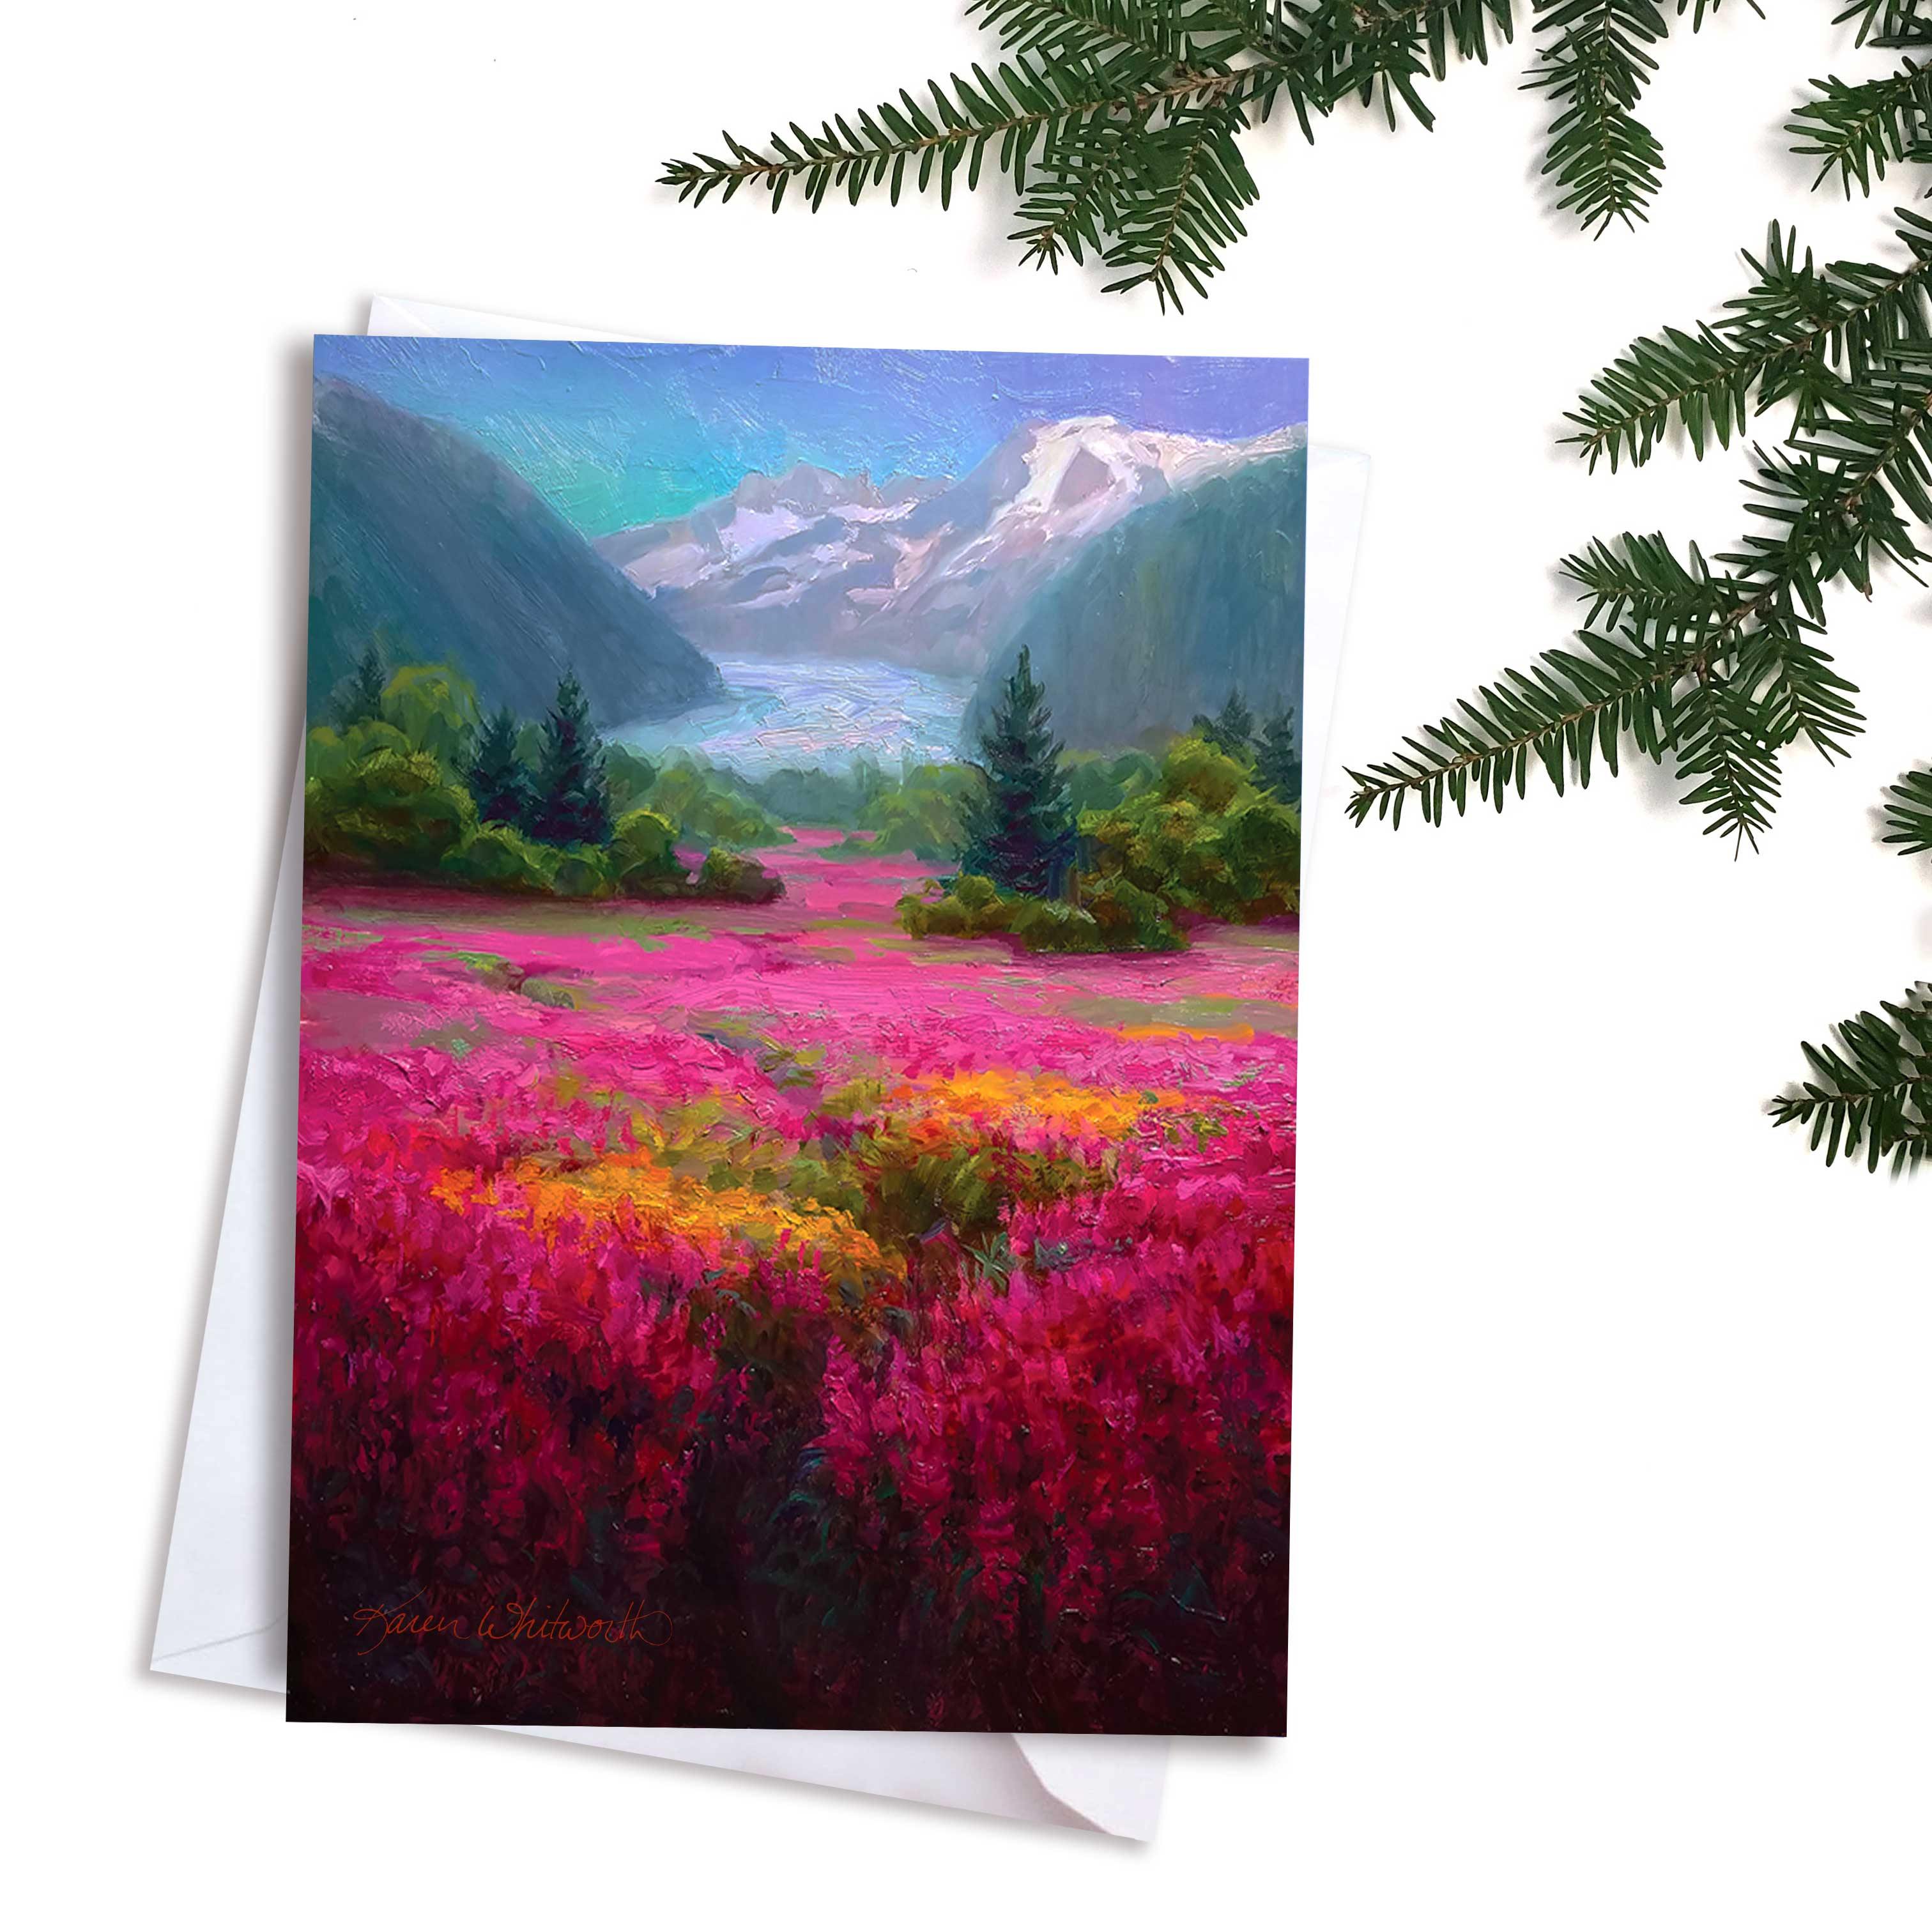 Mendenhall Glacier Alaska Mountain landscape greeting card by artist Karen Whitworth.